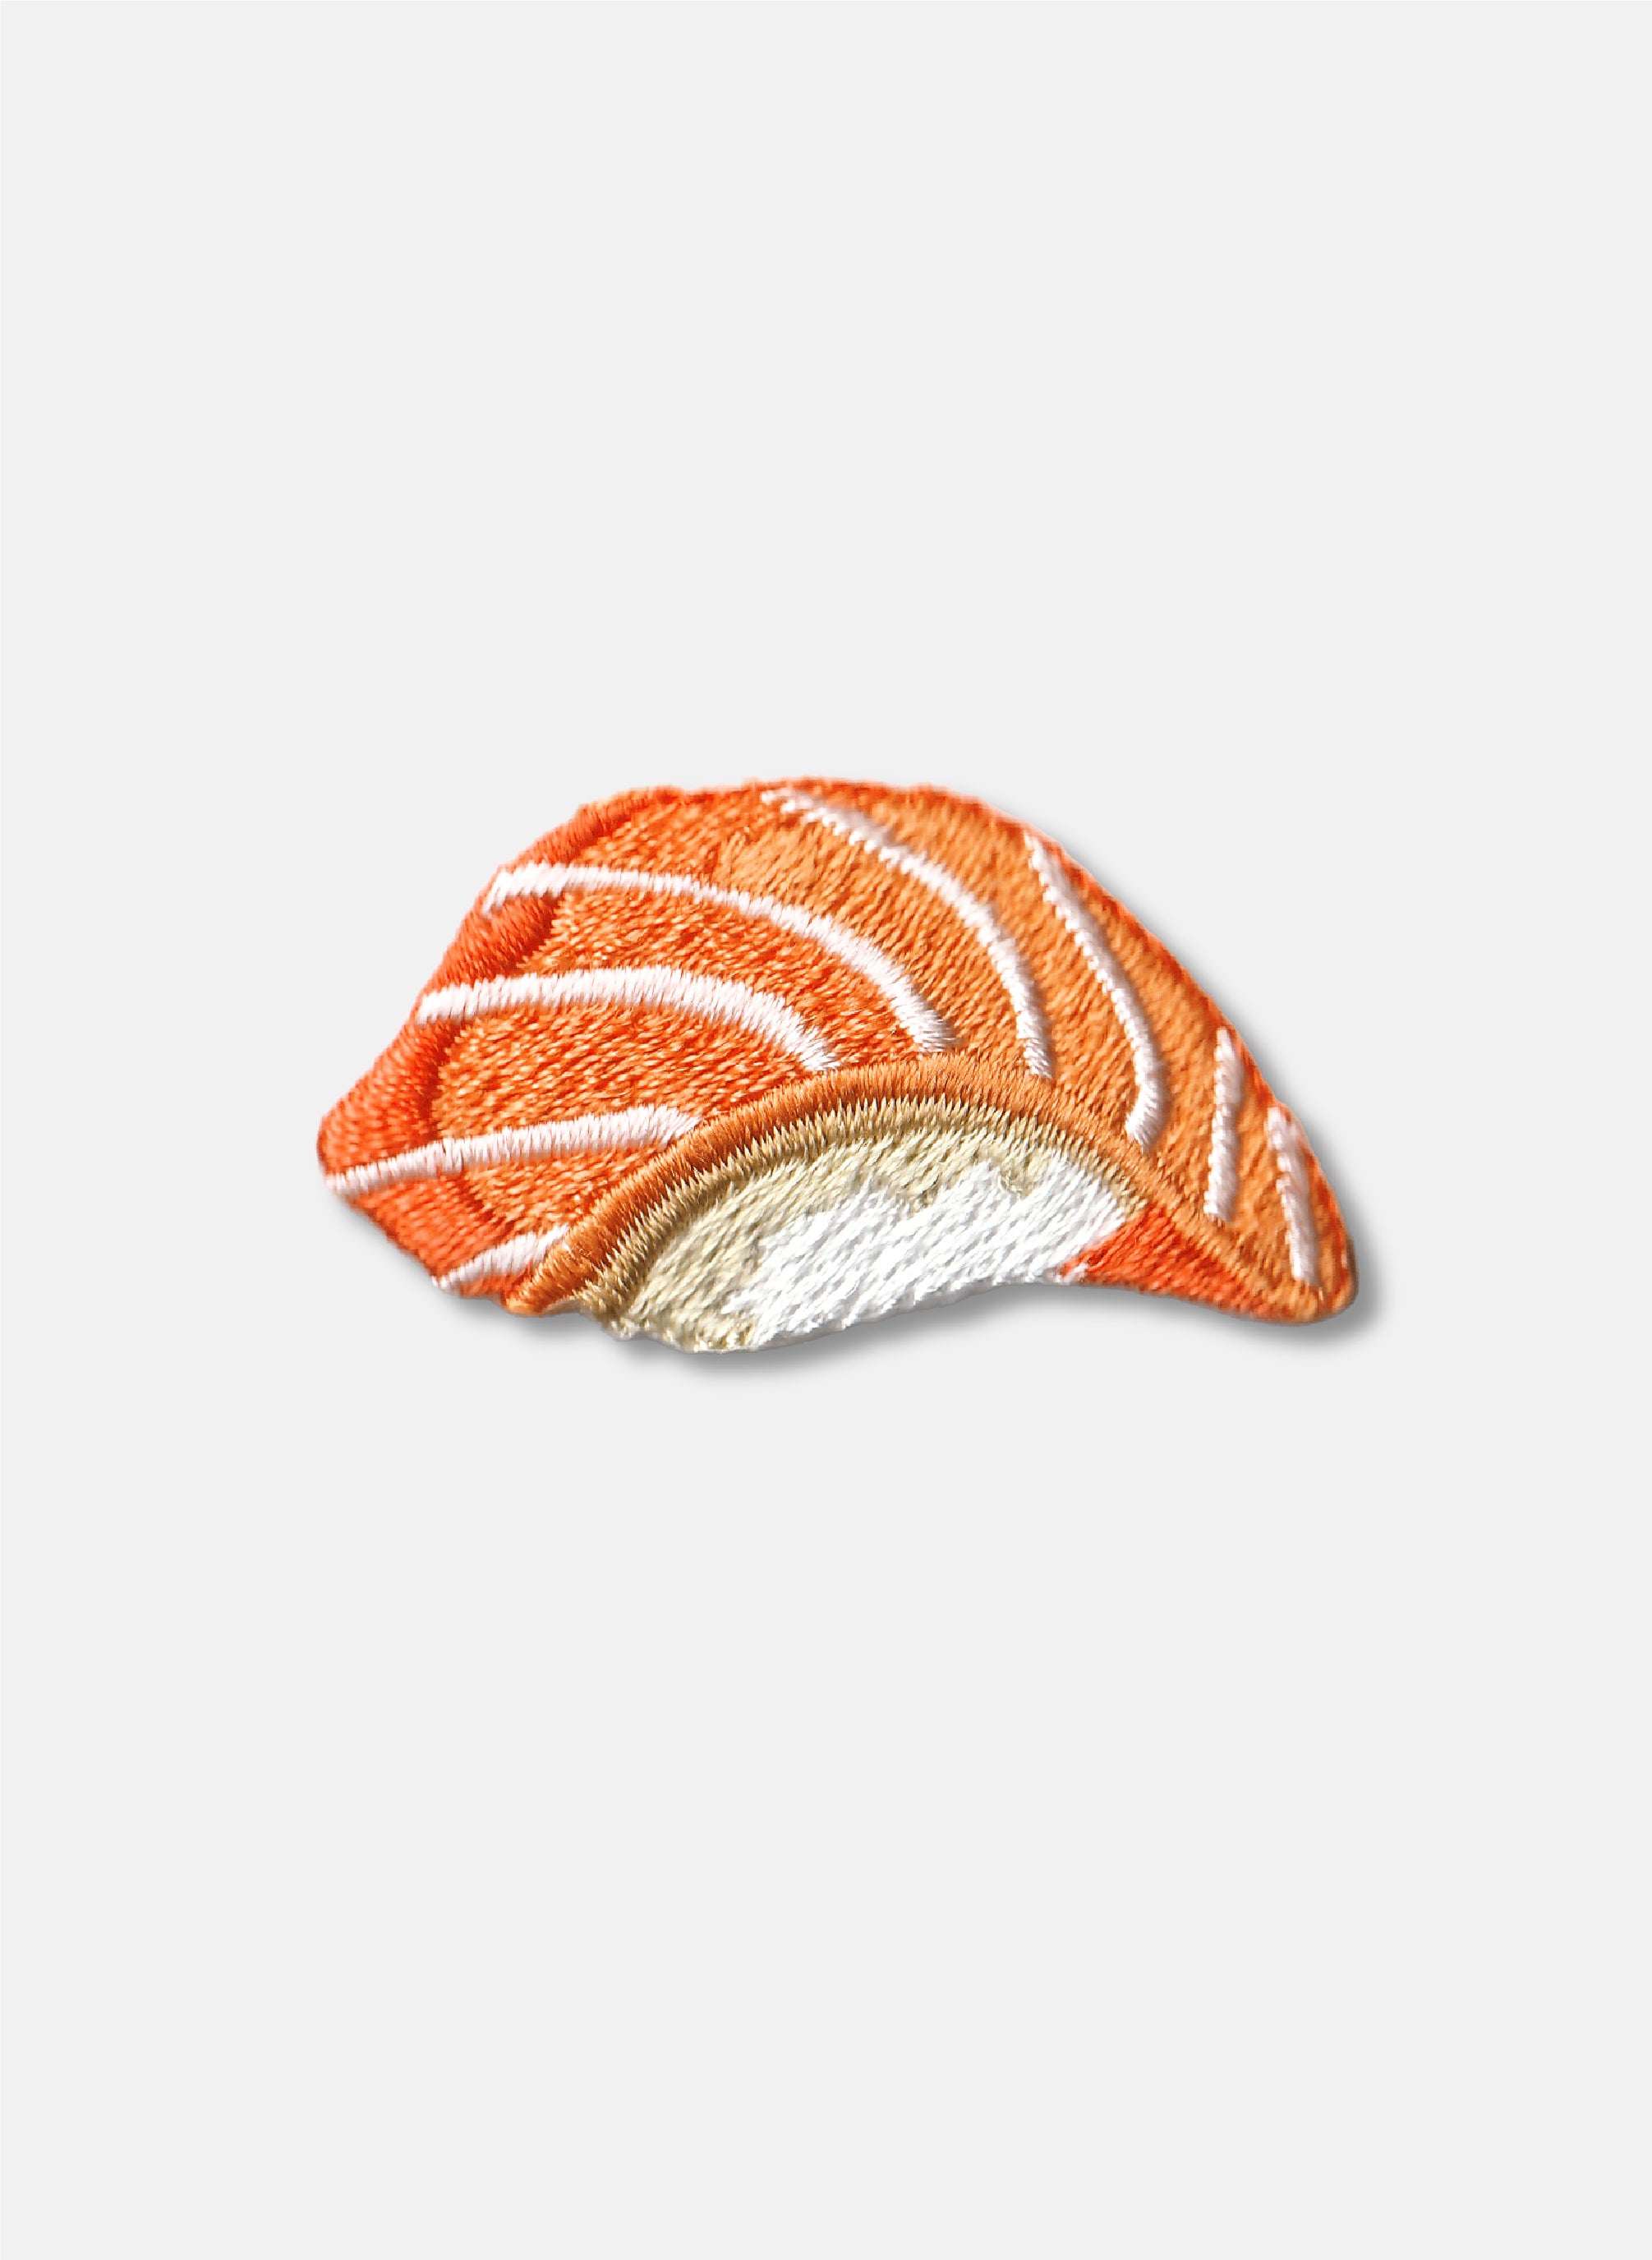 Salmon Sushi Iron On Patch